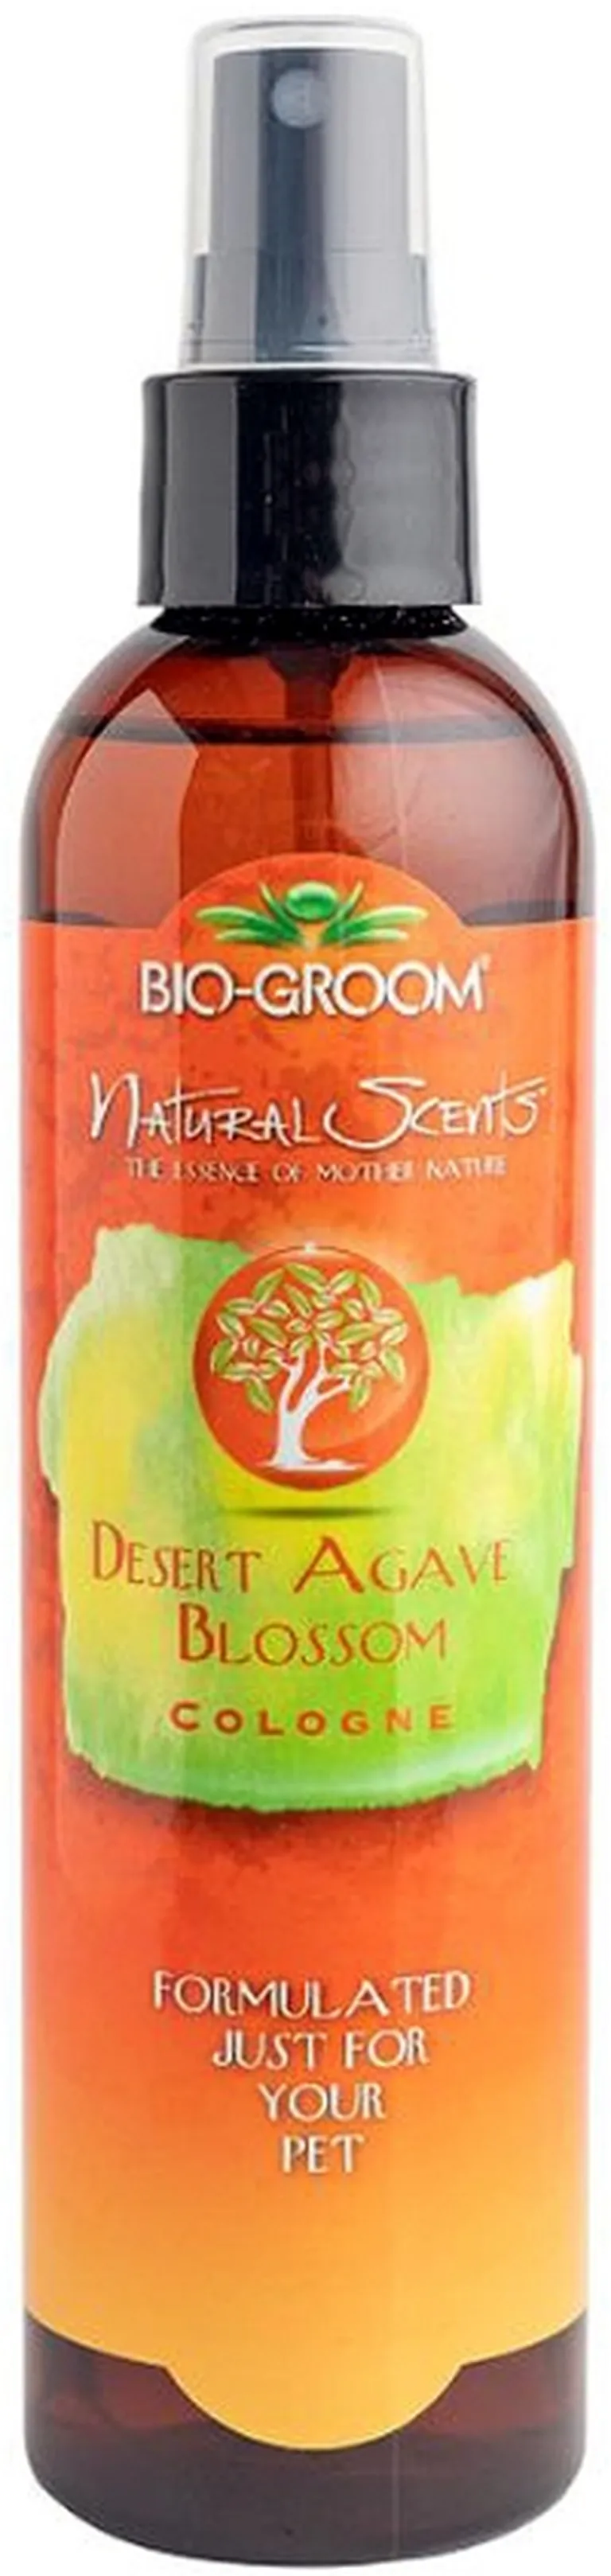 Bio Groom Natural Scents Desert Agave Blossom Dog Cologne Photo 4